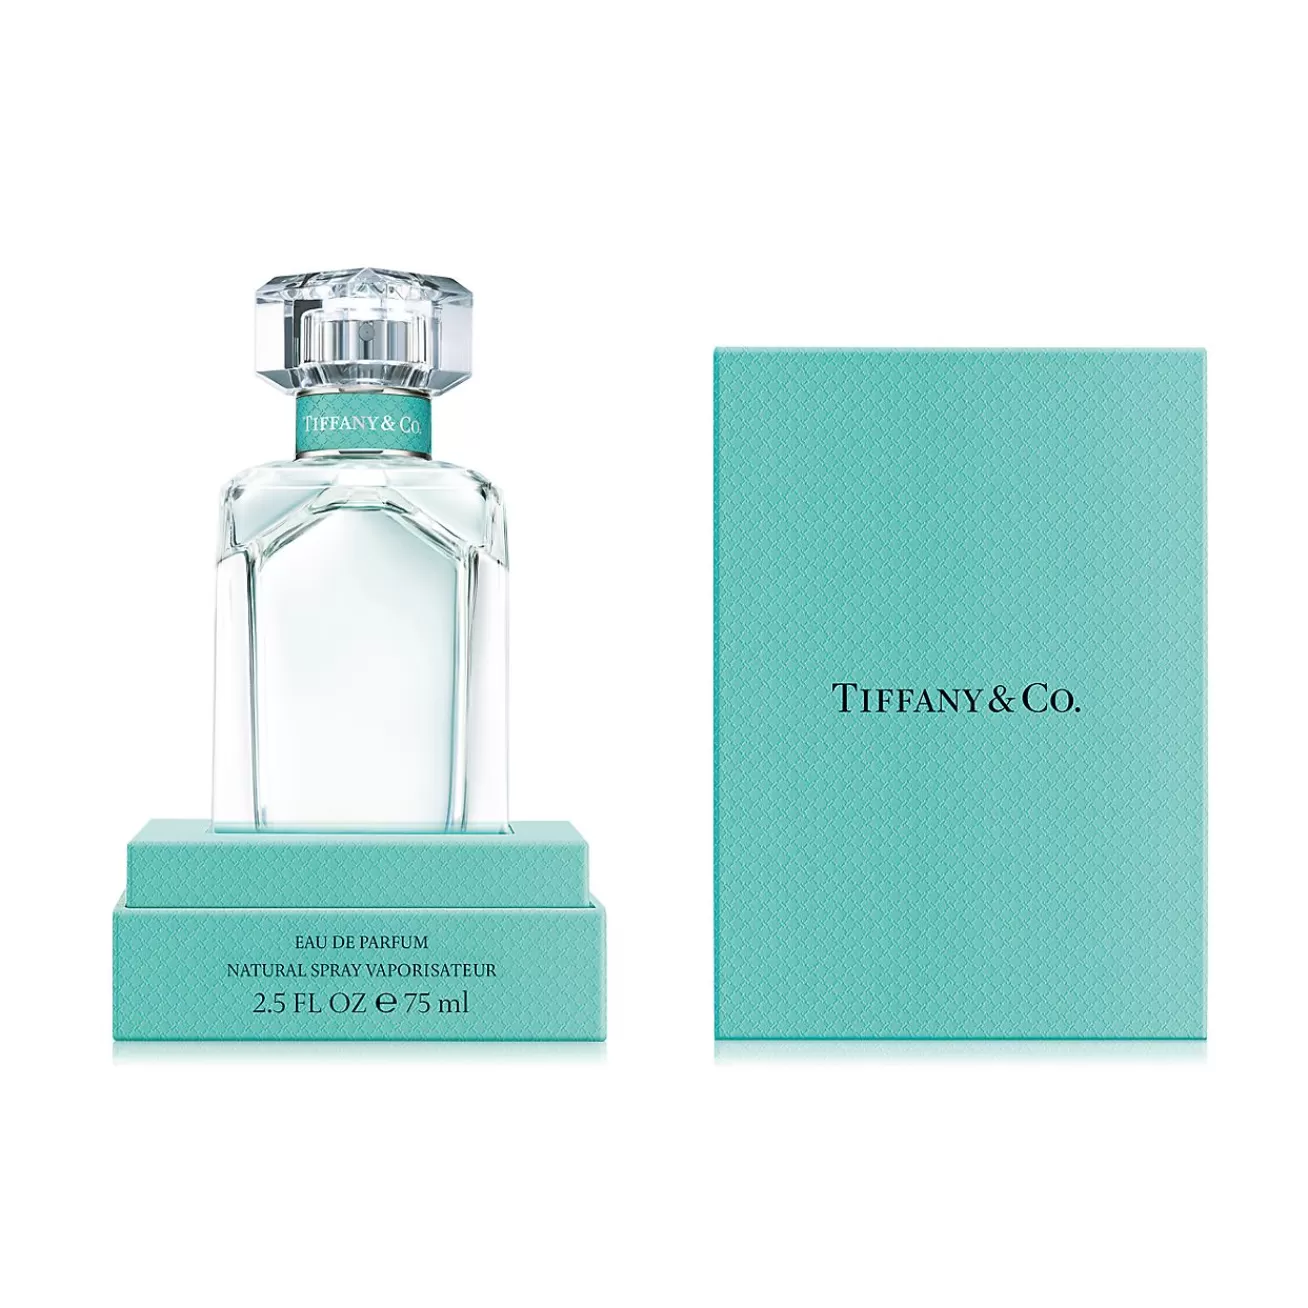 Tiffany & Co. Tiffany eau de parfum, 2.5 ounces. | ^ Tiffany Blue® Gifts | Gifts to Personalize